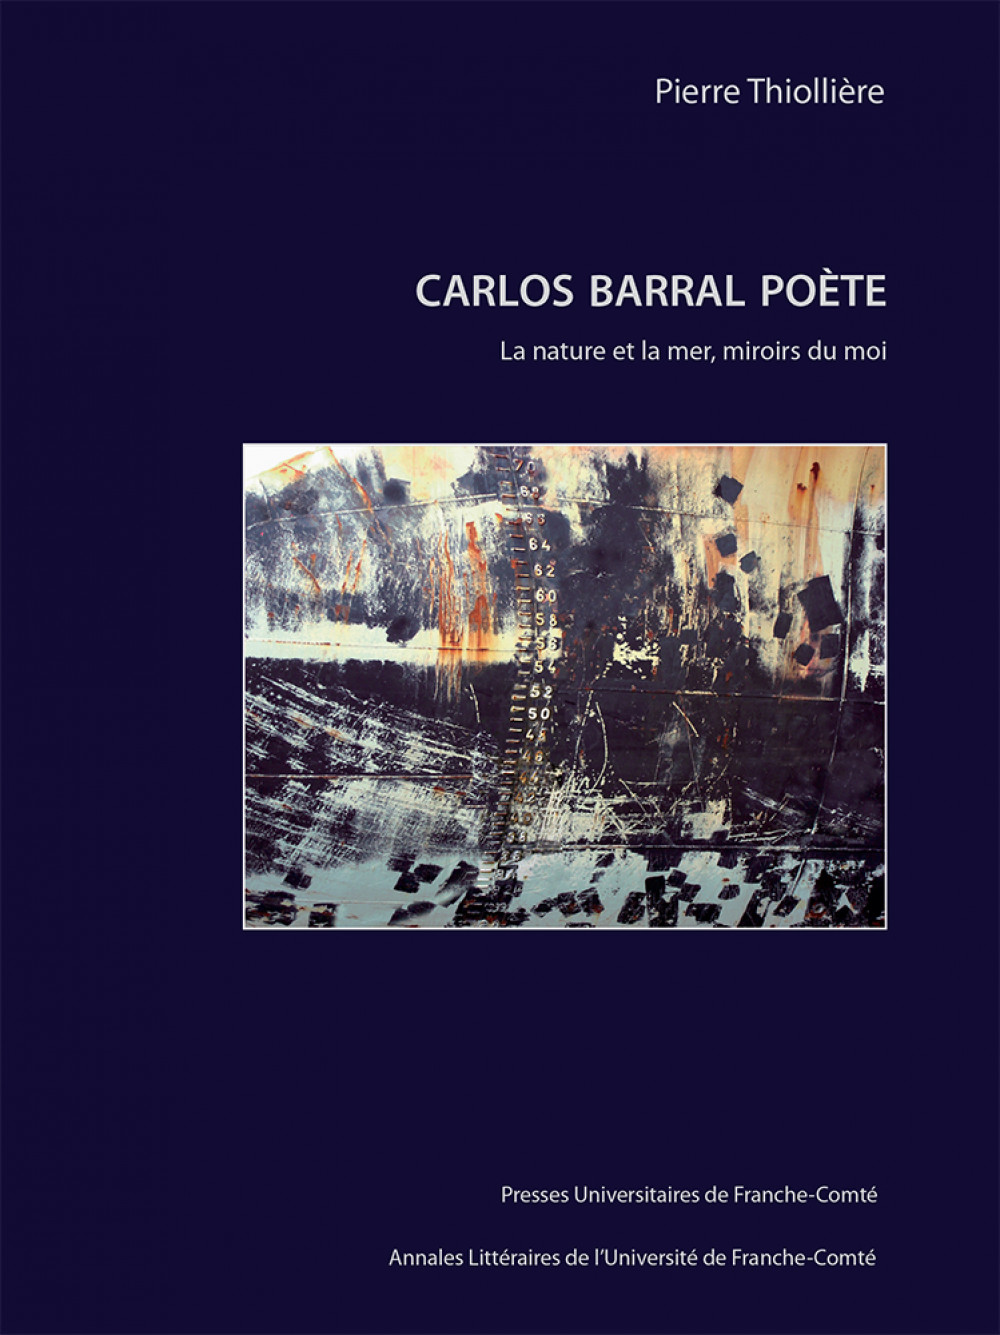 Carlos Barral poète